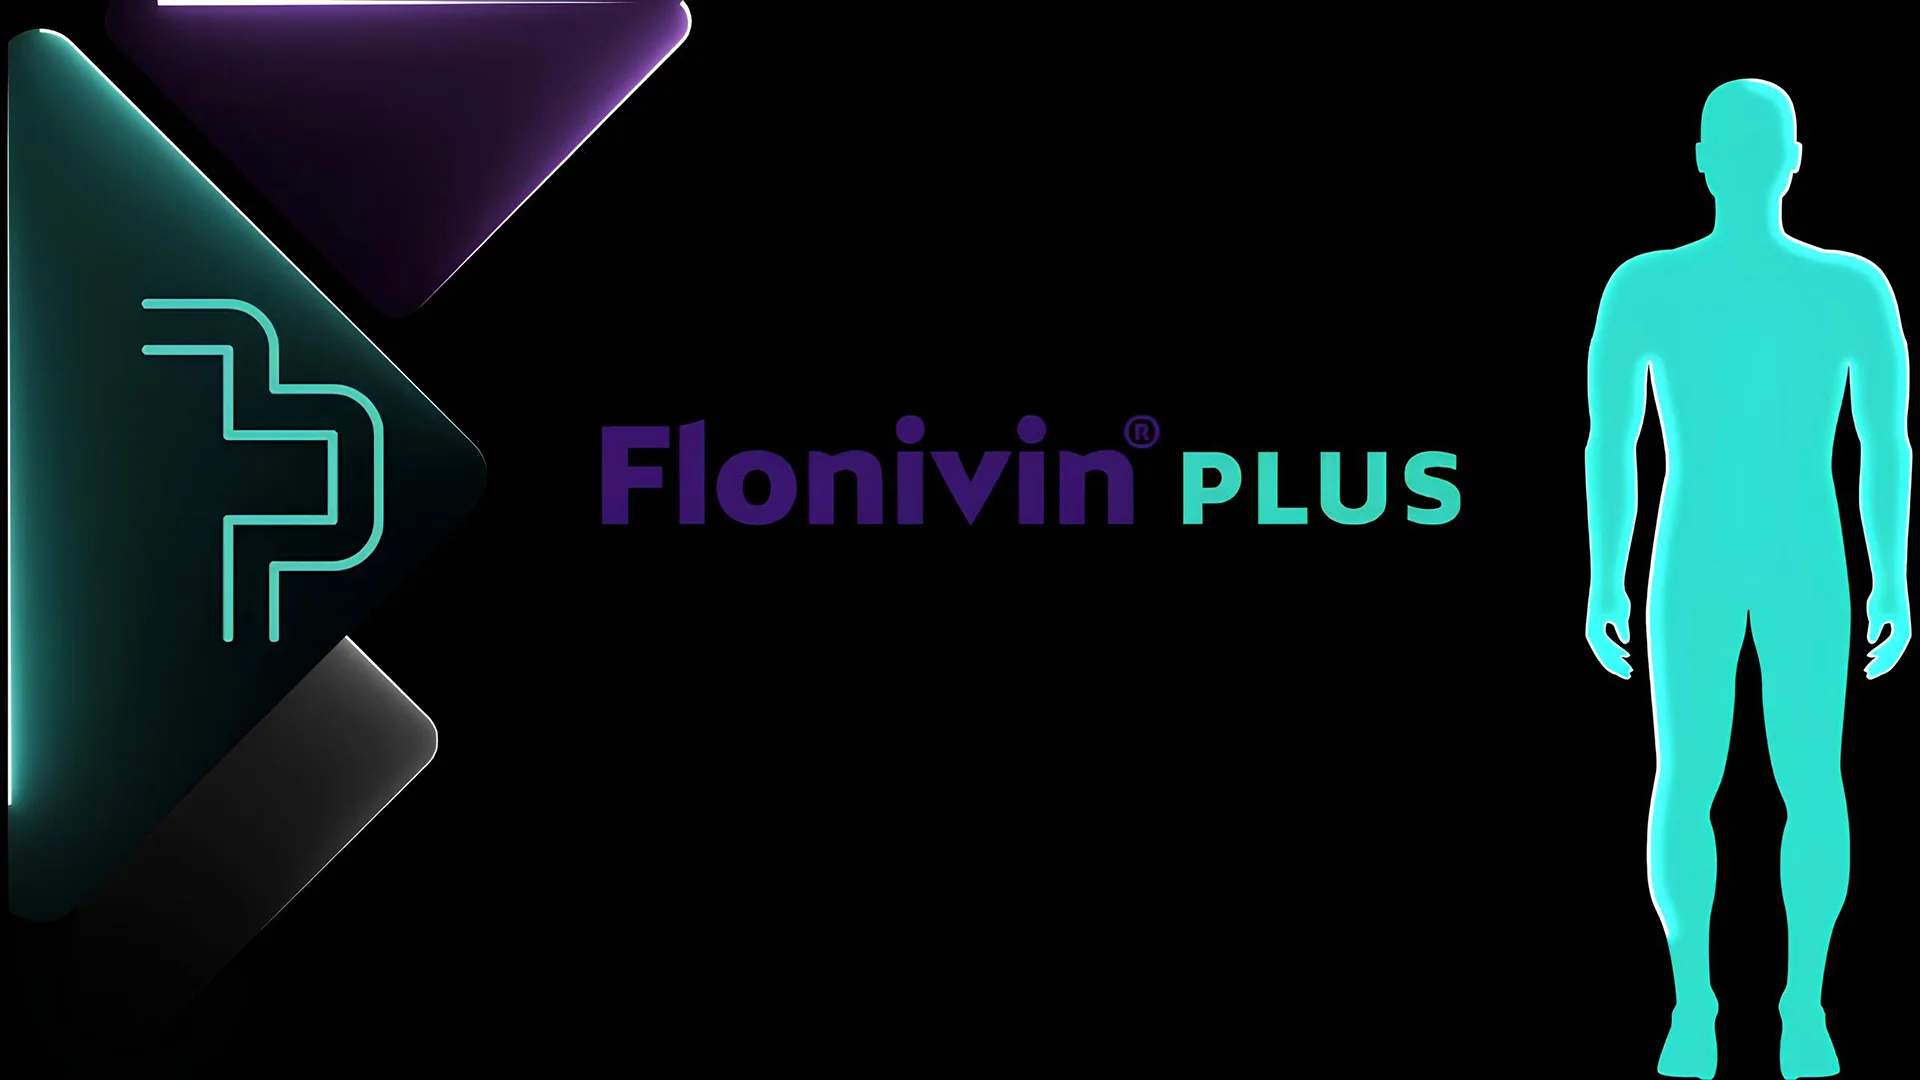 GALENIKA - Flonivin plus - mapped projection for Posh & Media